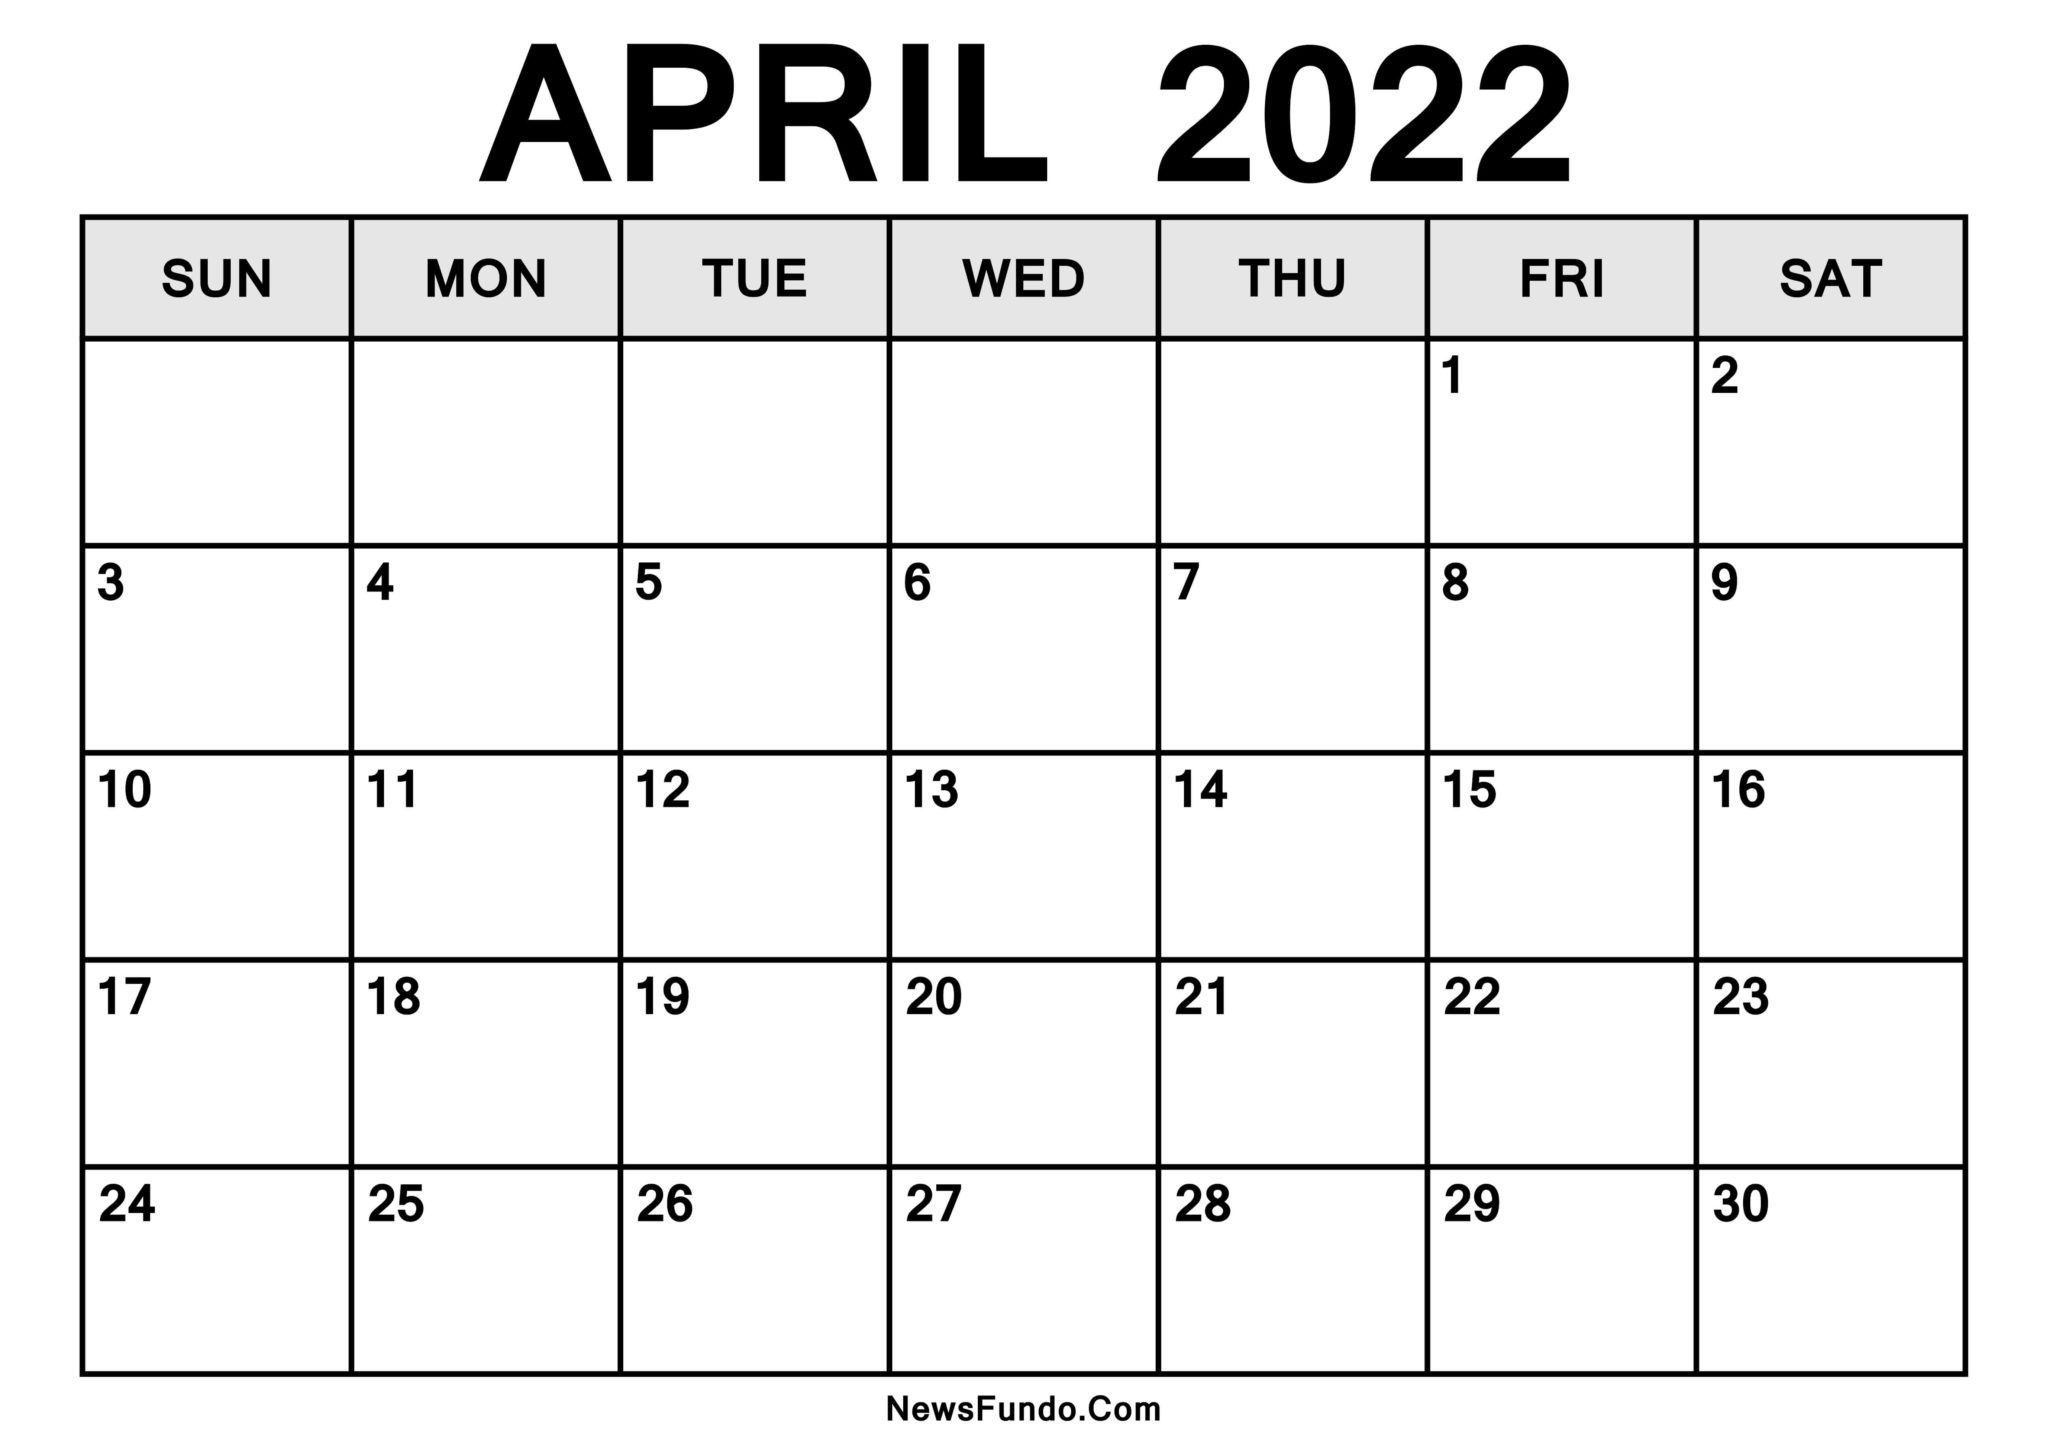 April 2022 Calendar Template Printable - Print Now  Calendar November 2022 To April 2022